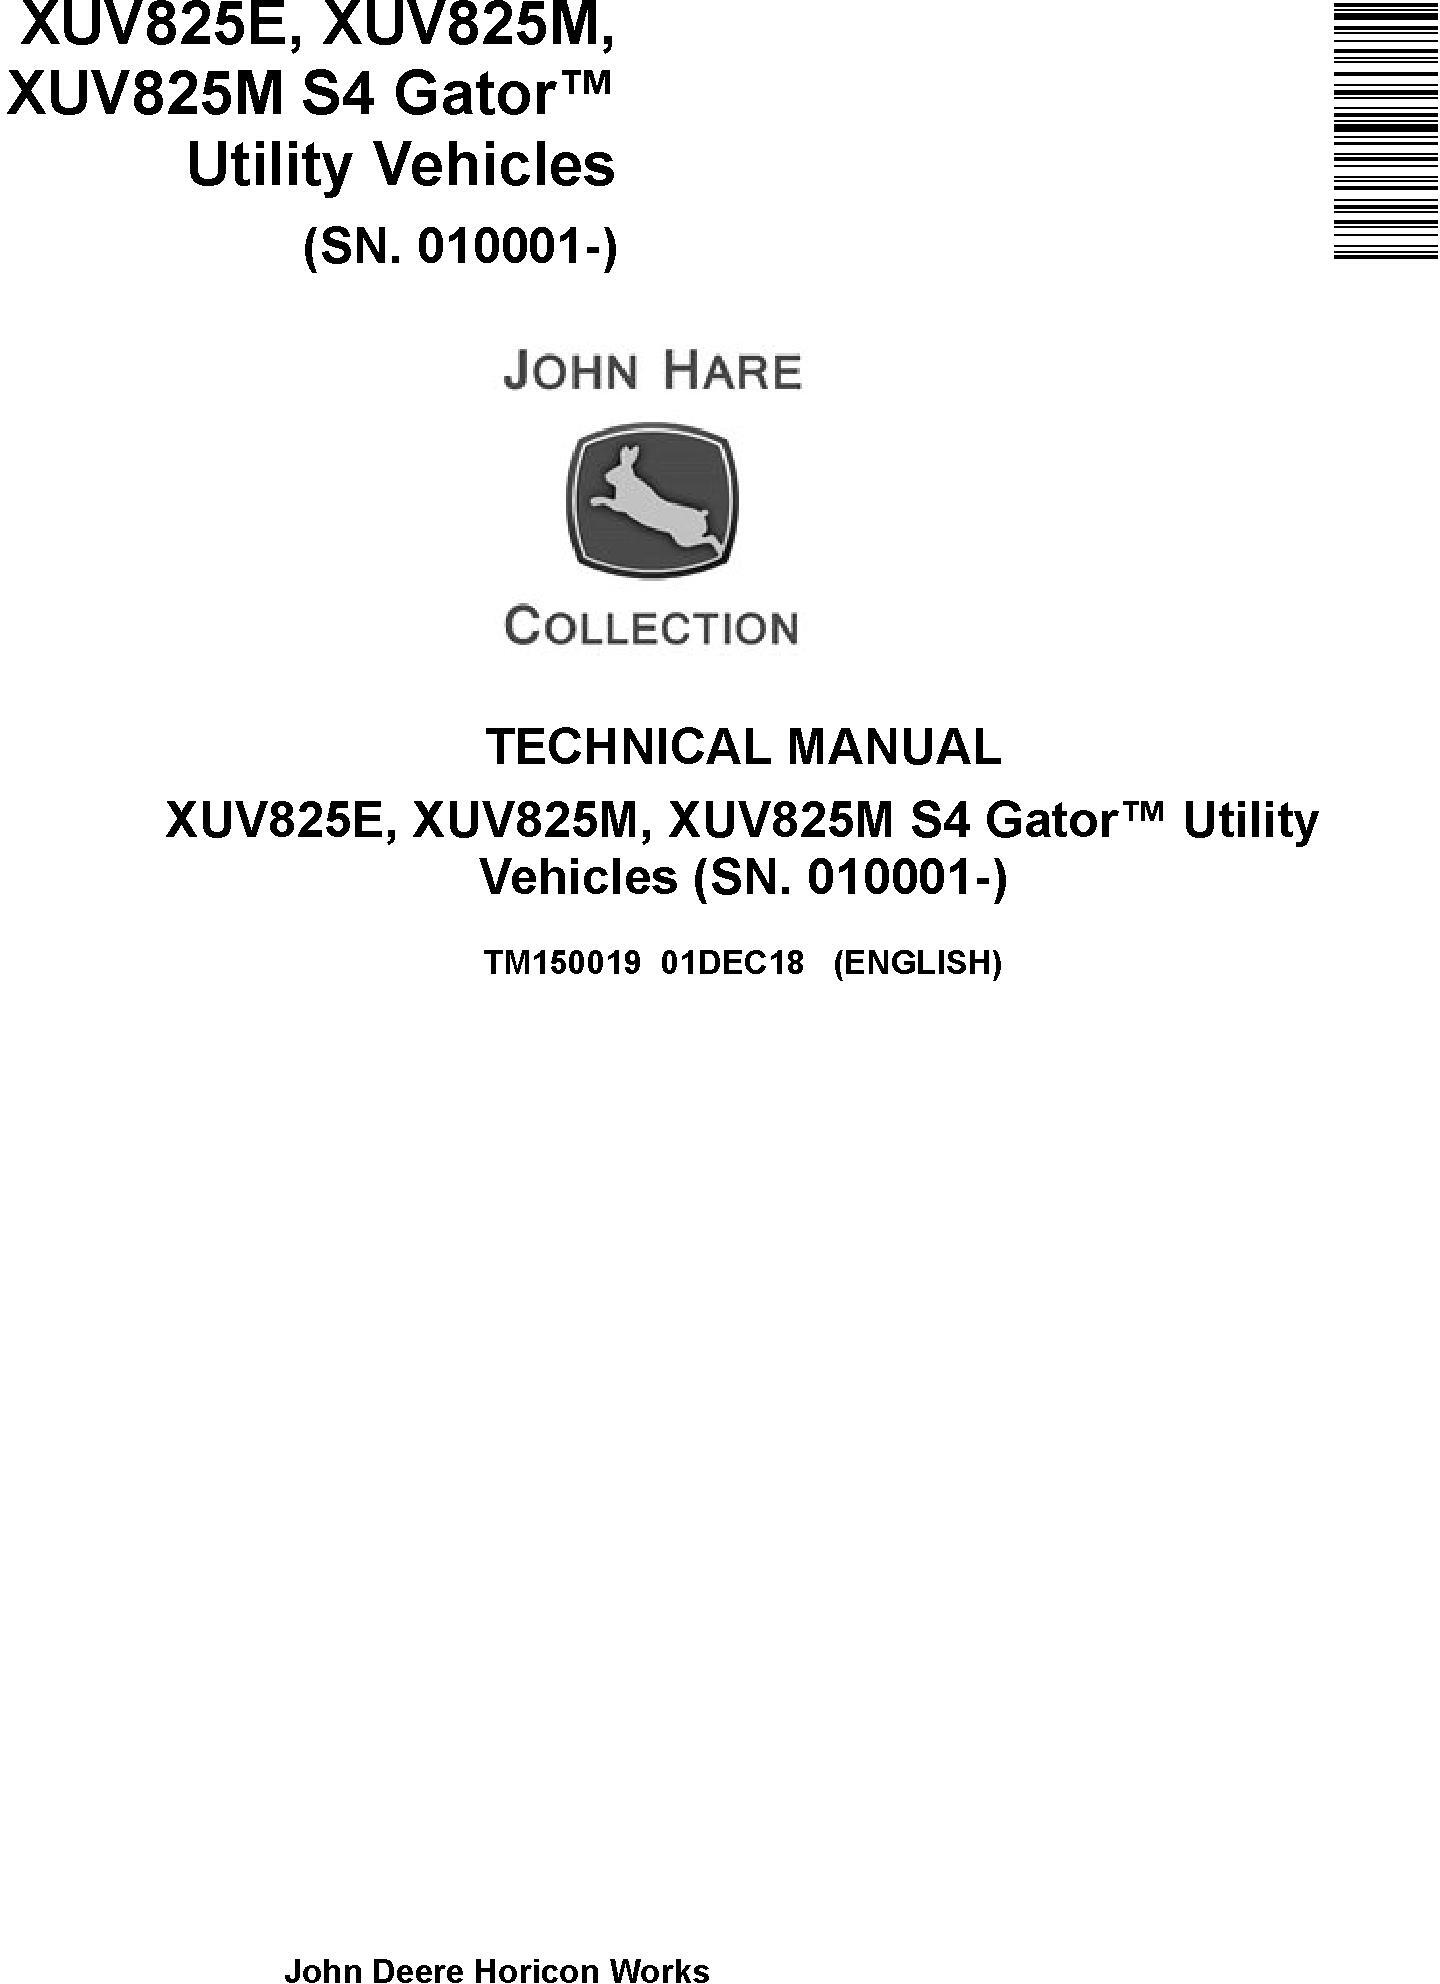 John Deere XUV825E XUV825M, XUV825M S4 Gator Utility Vehicles (SN.010001-) Technical Manual TM150019